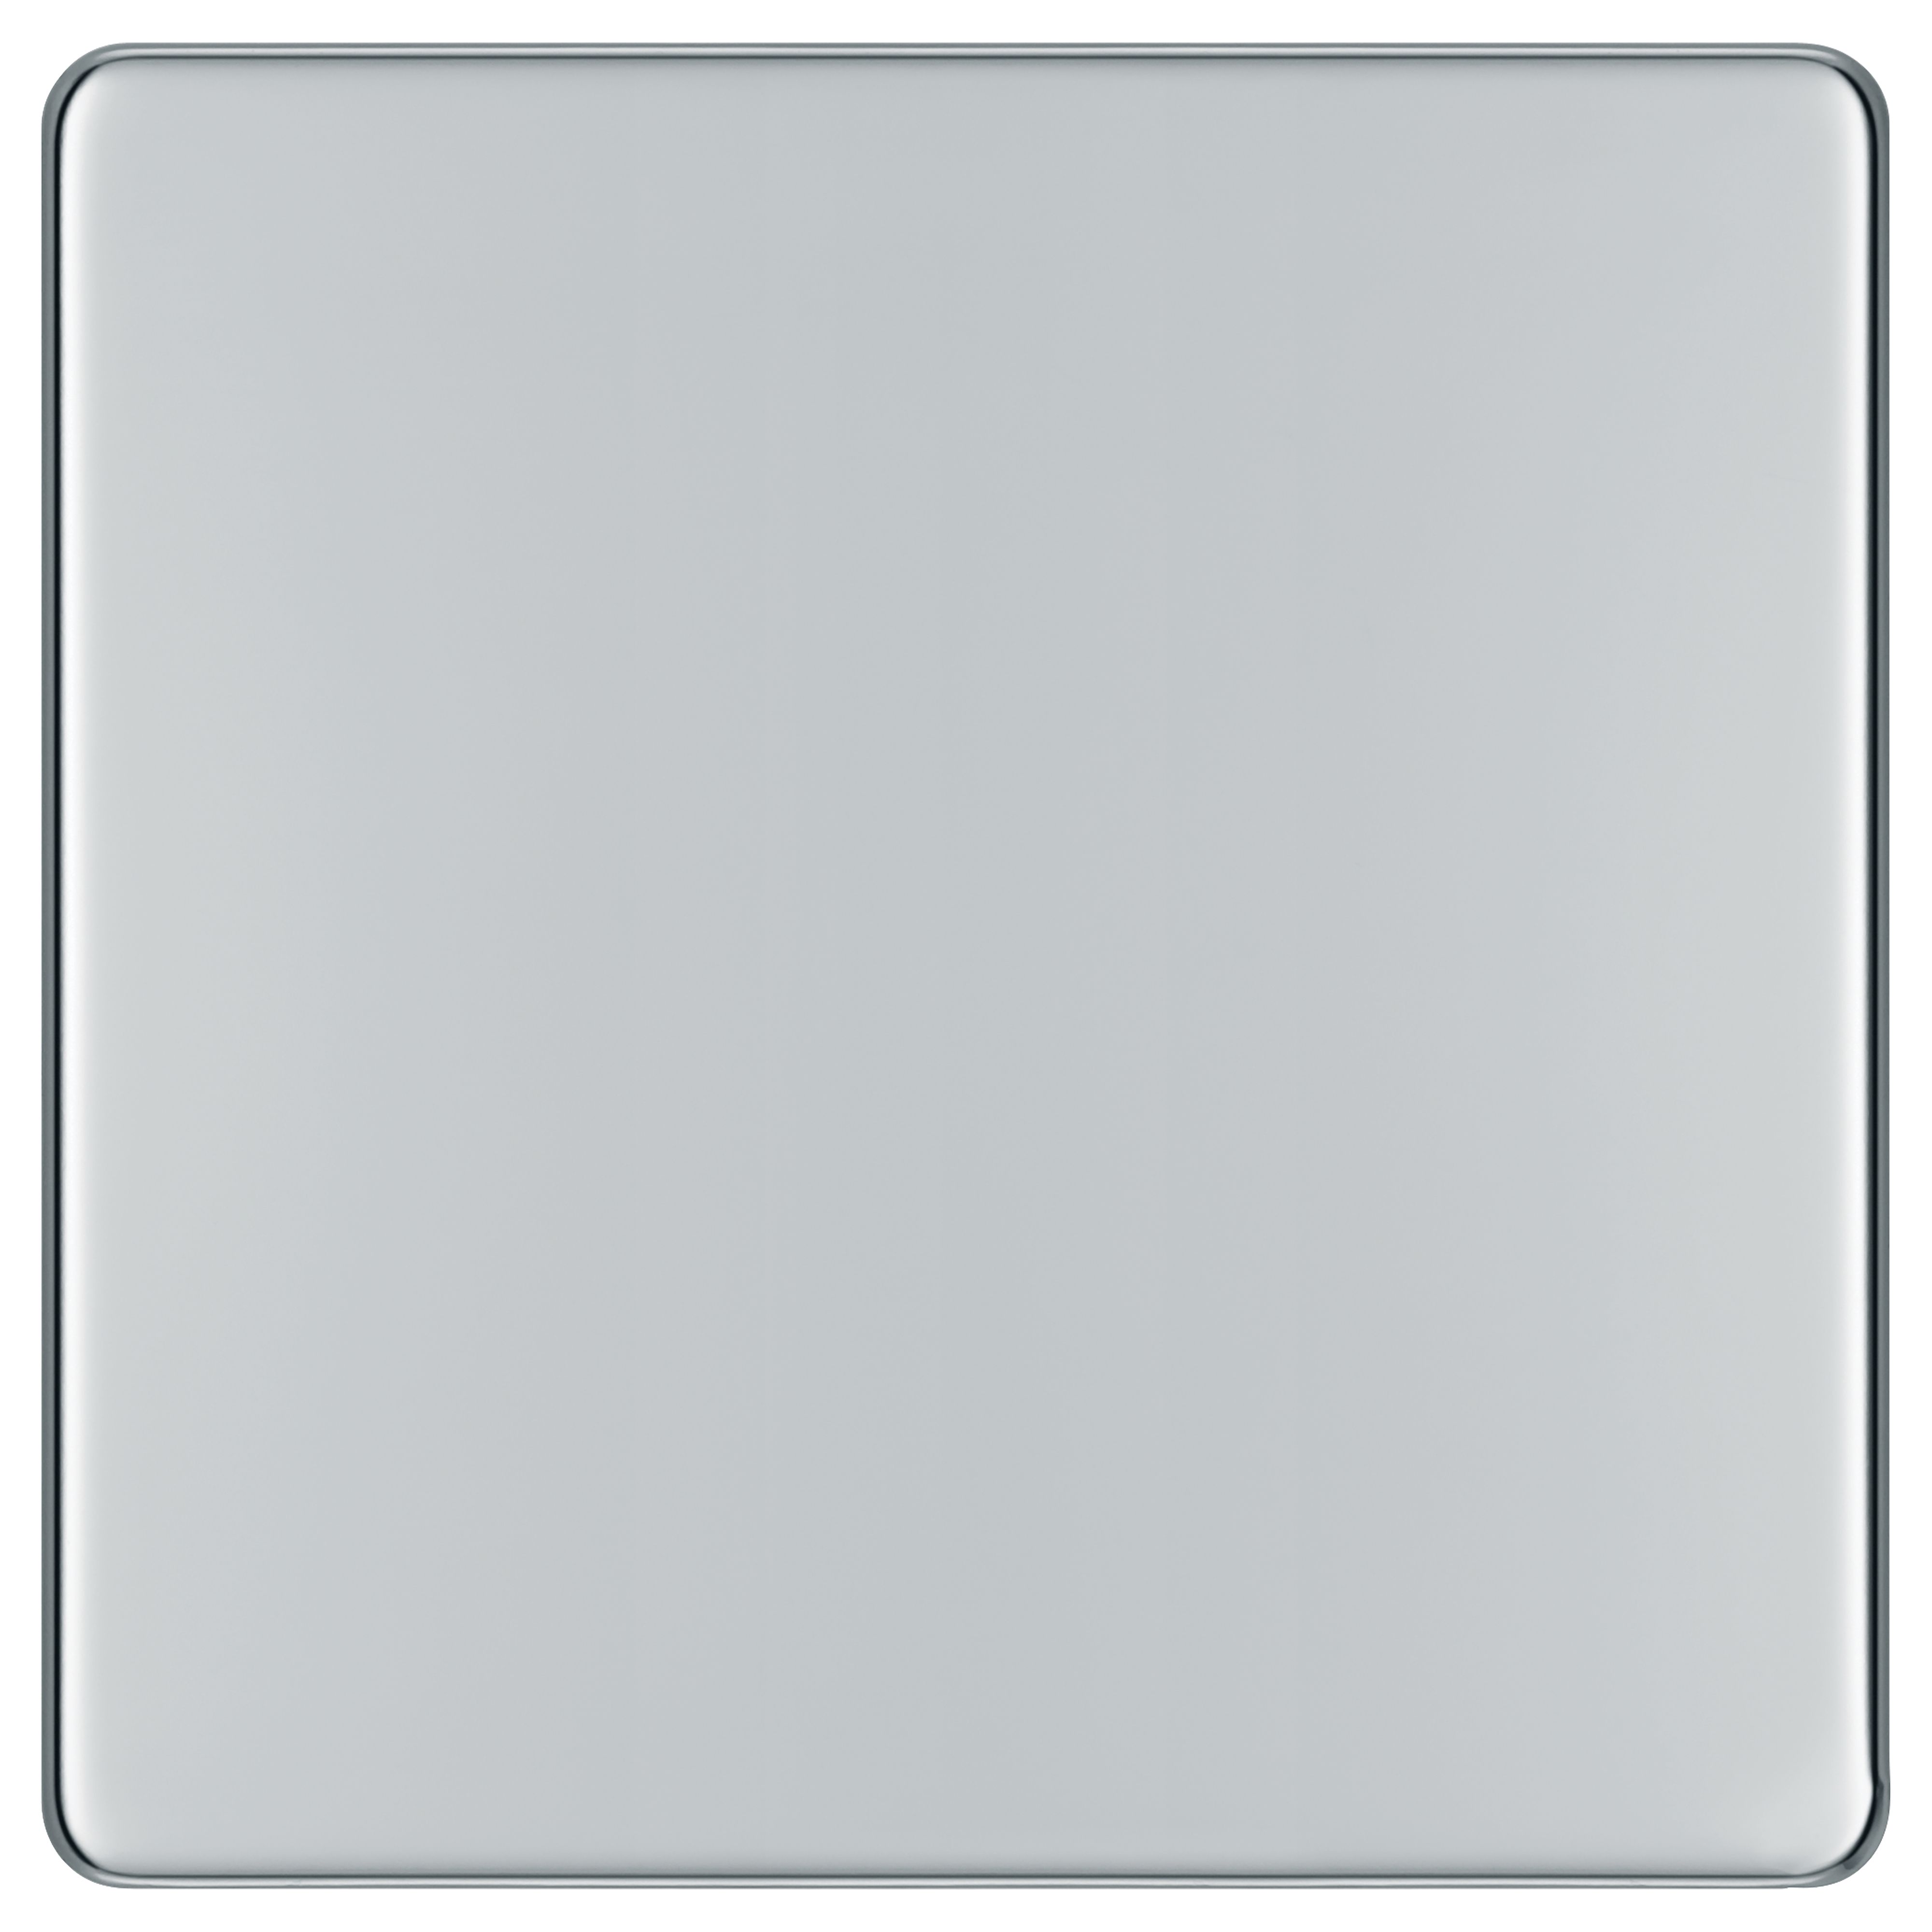 Image of BG Screwless Flatplate Polished Chrome 1 Gang Blank Plate